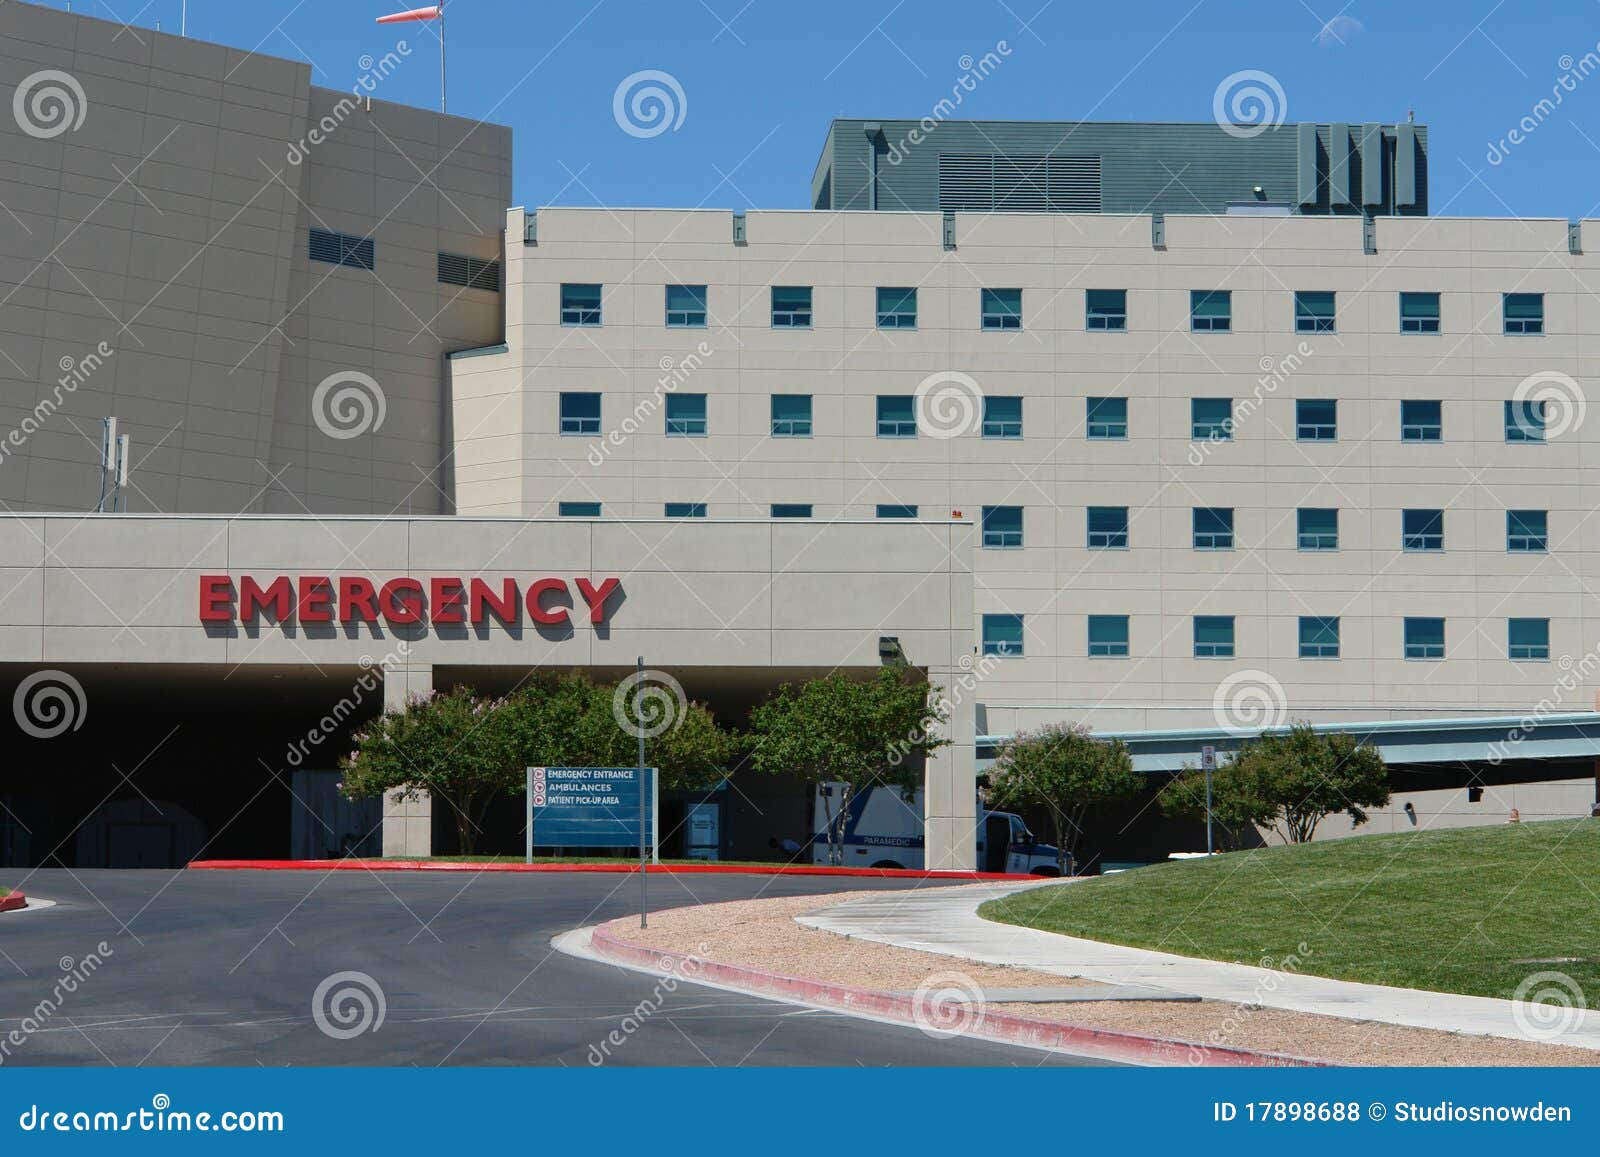 emergency hospital building